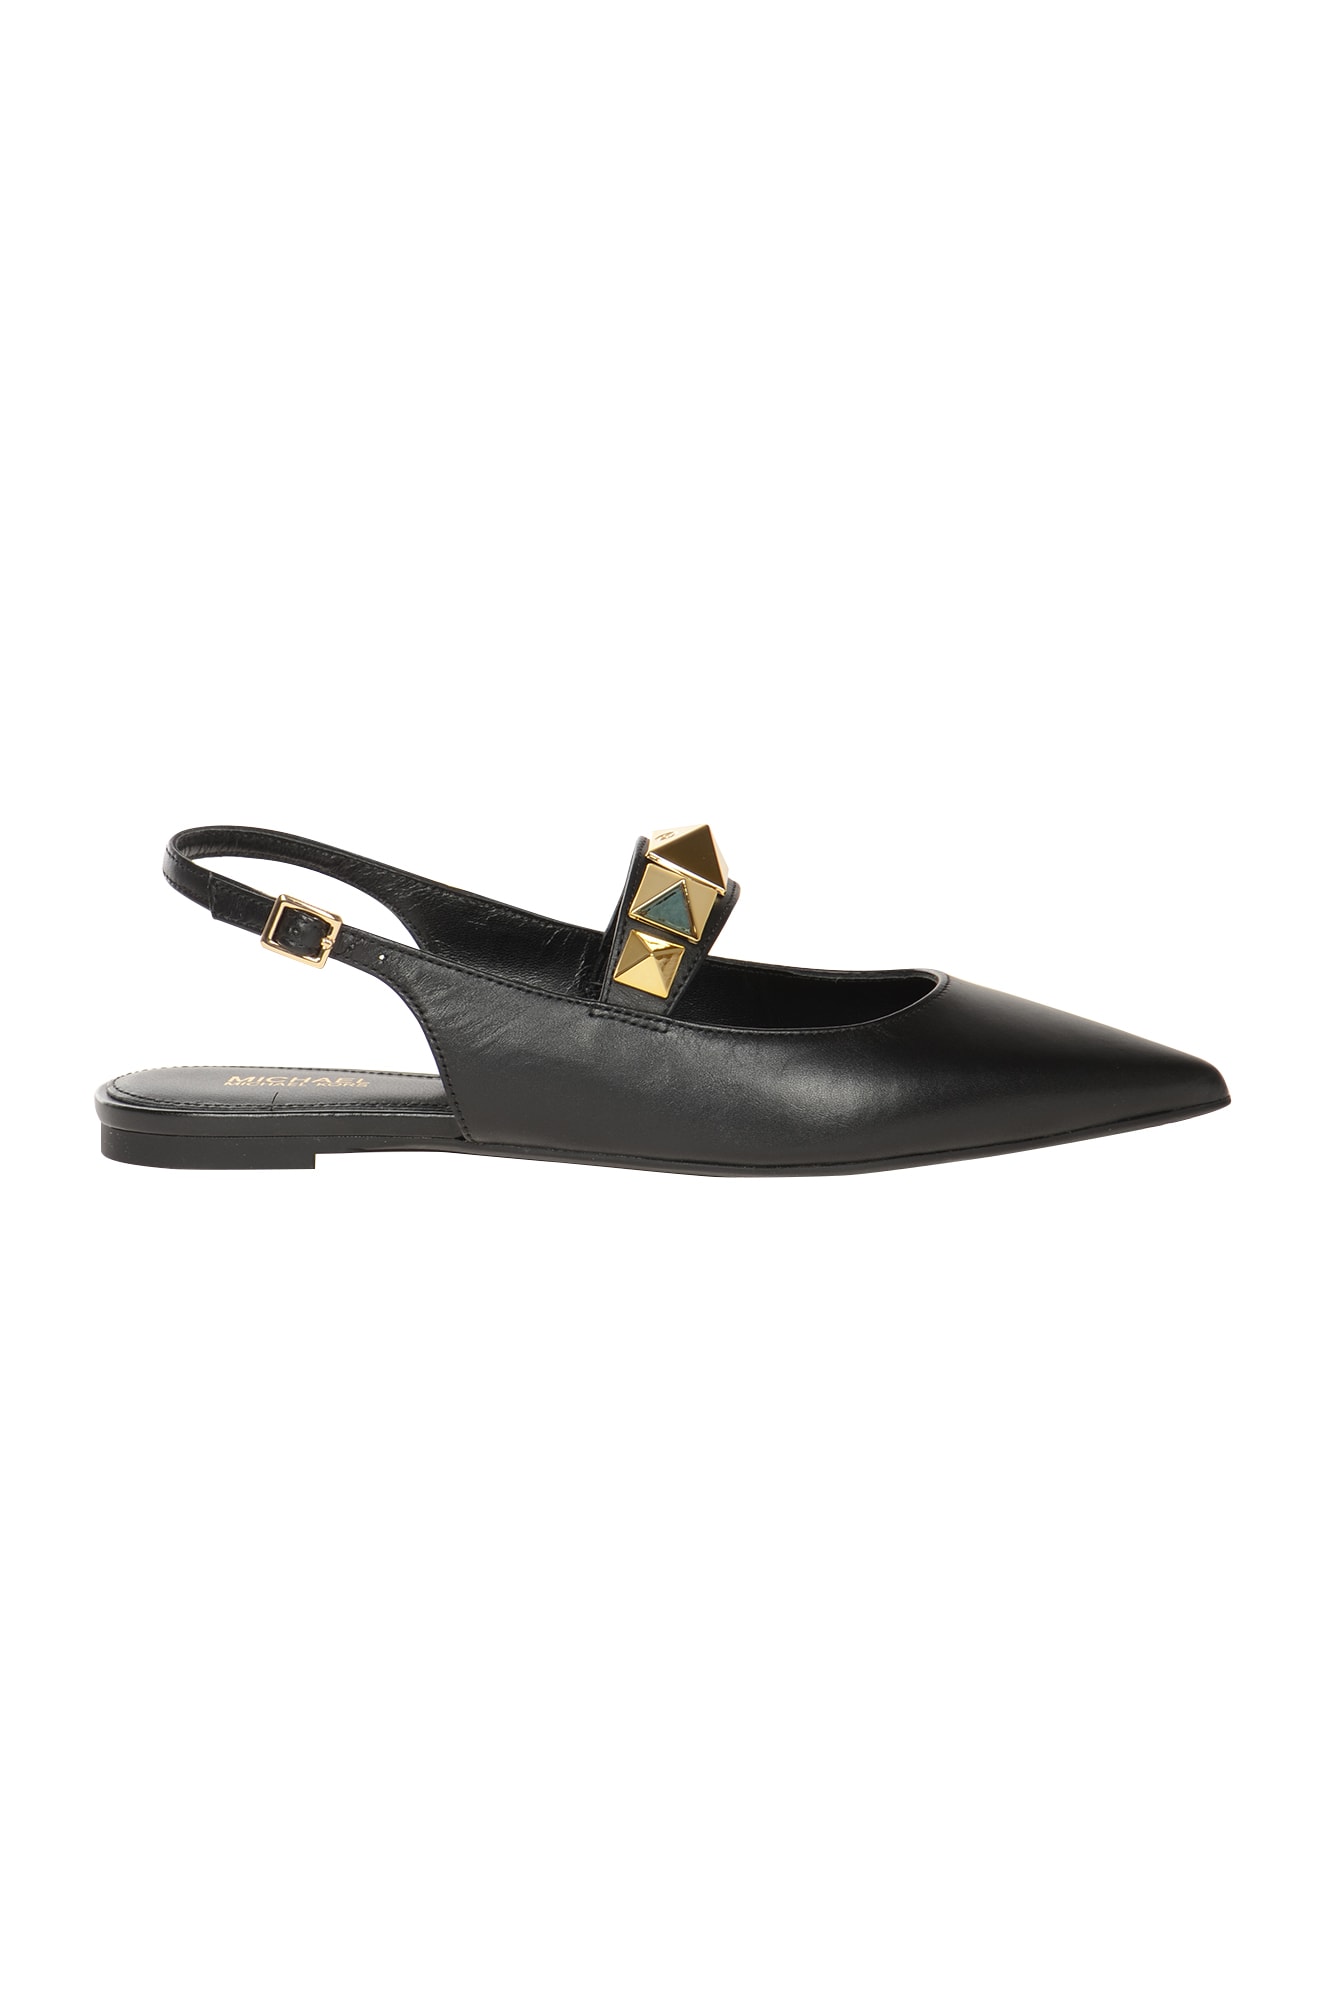 Michael Kors Wren Flex Slingback Sandals